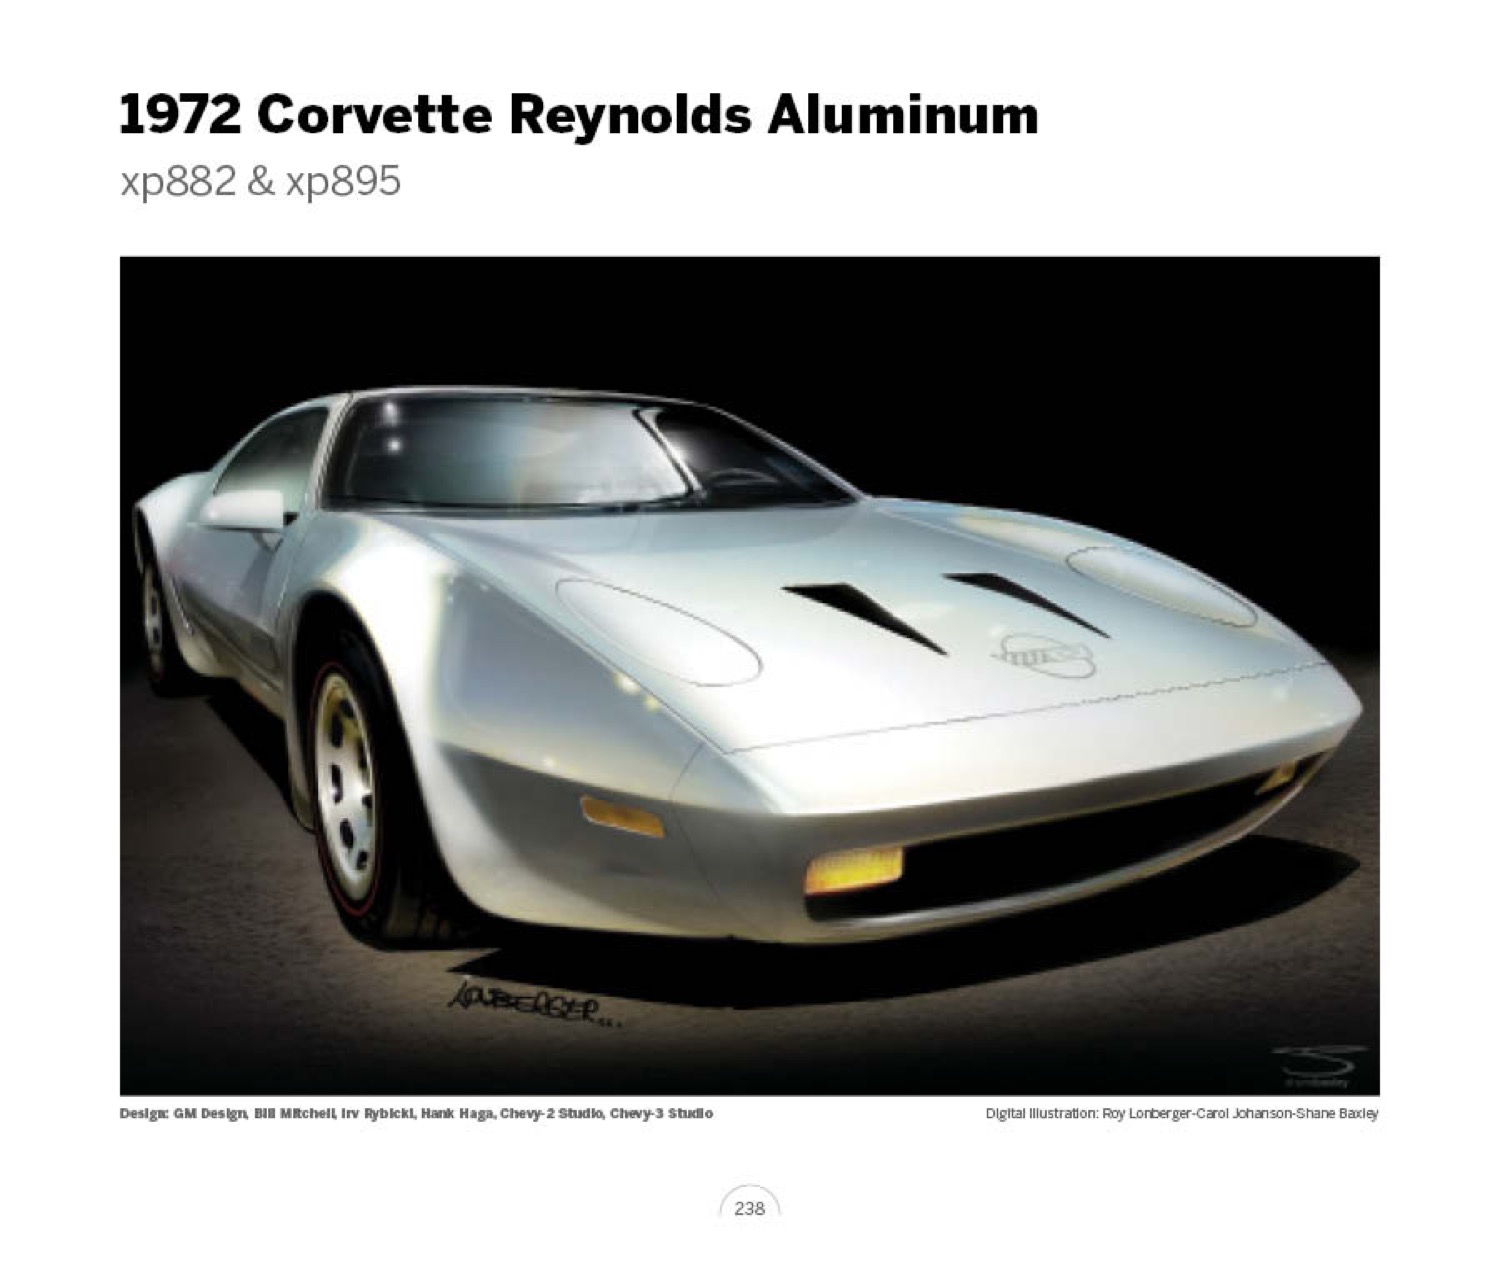 (38) 1972 Corvette Reynolds Aluminum xp882-xp895 LoRez.jpg